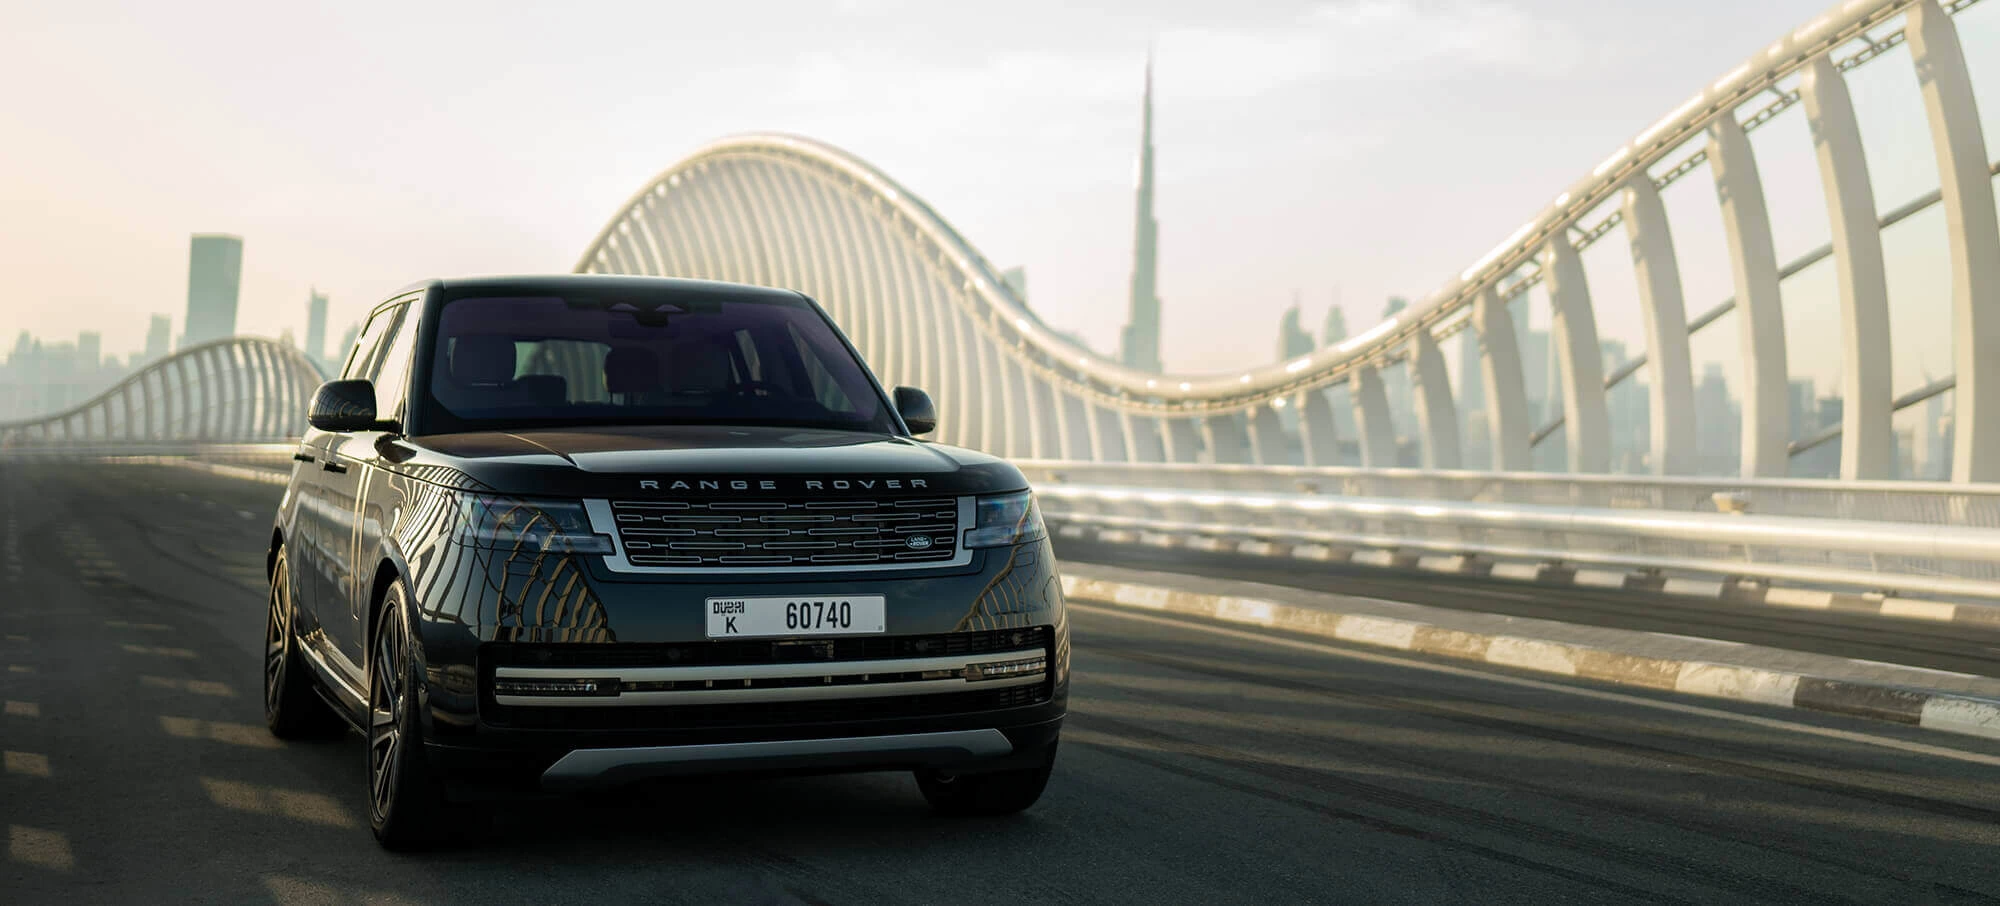 Rent Range Rover no Dubai